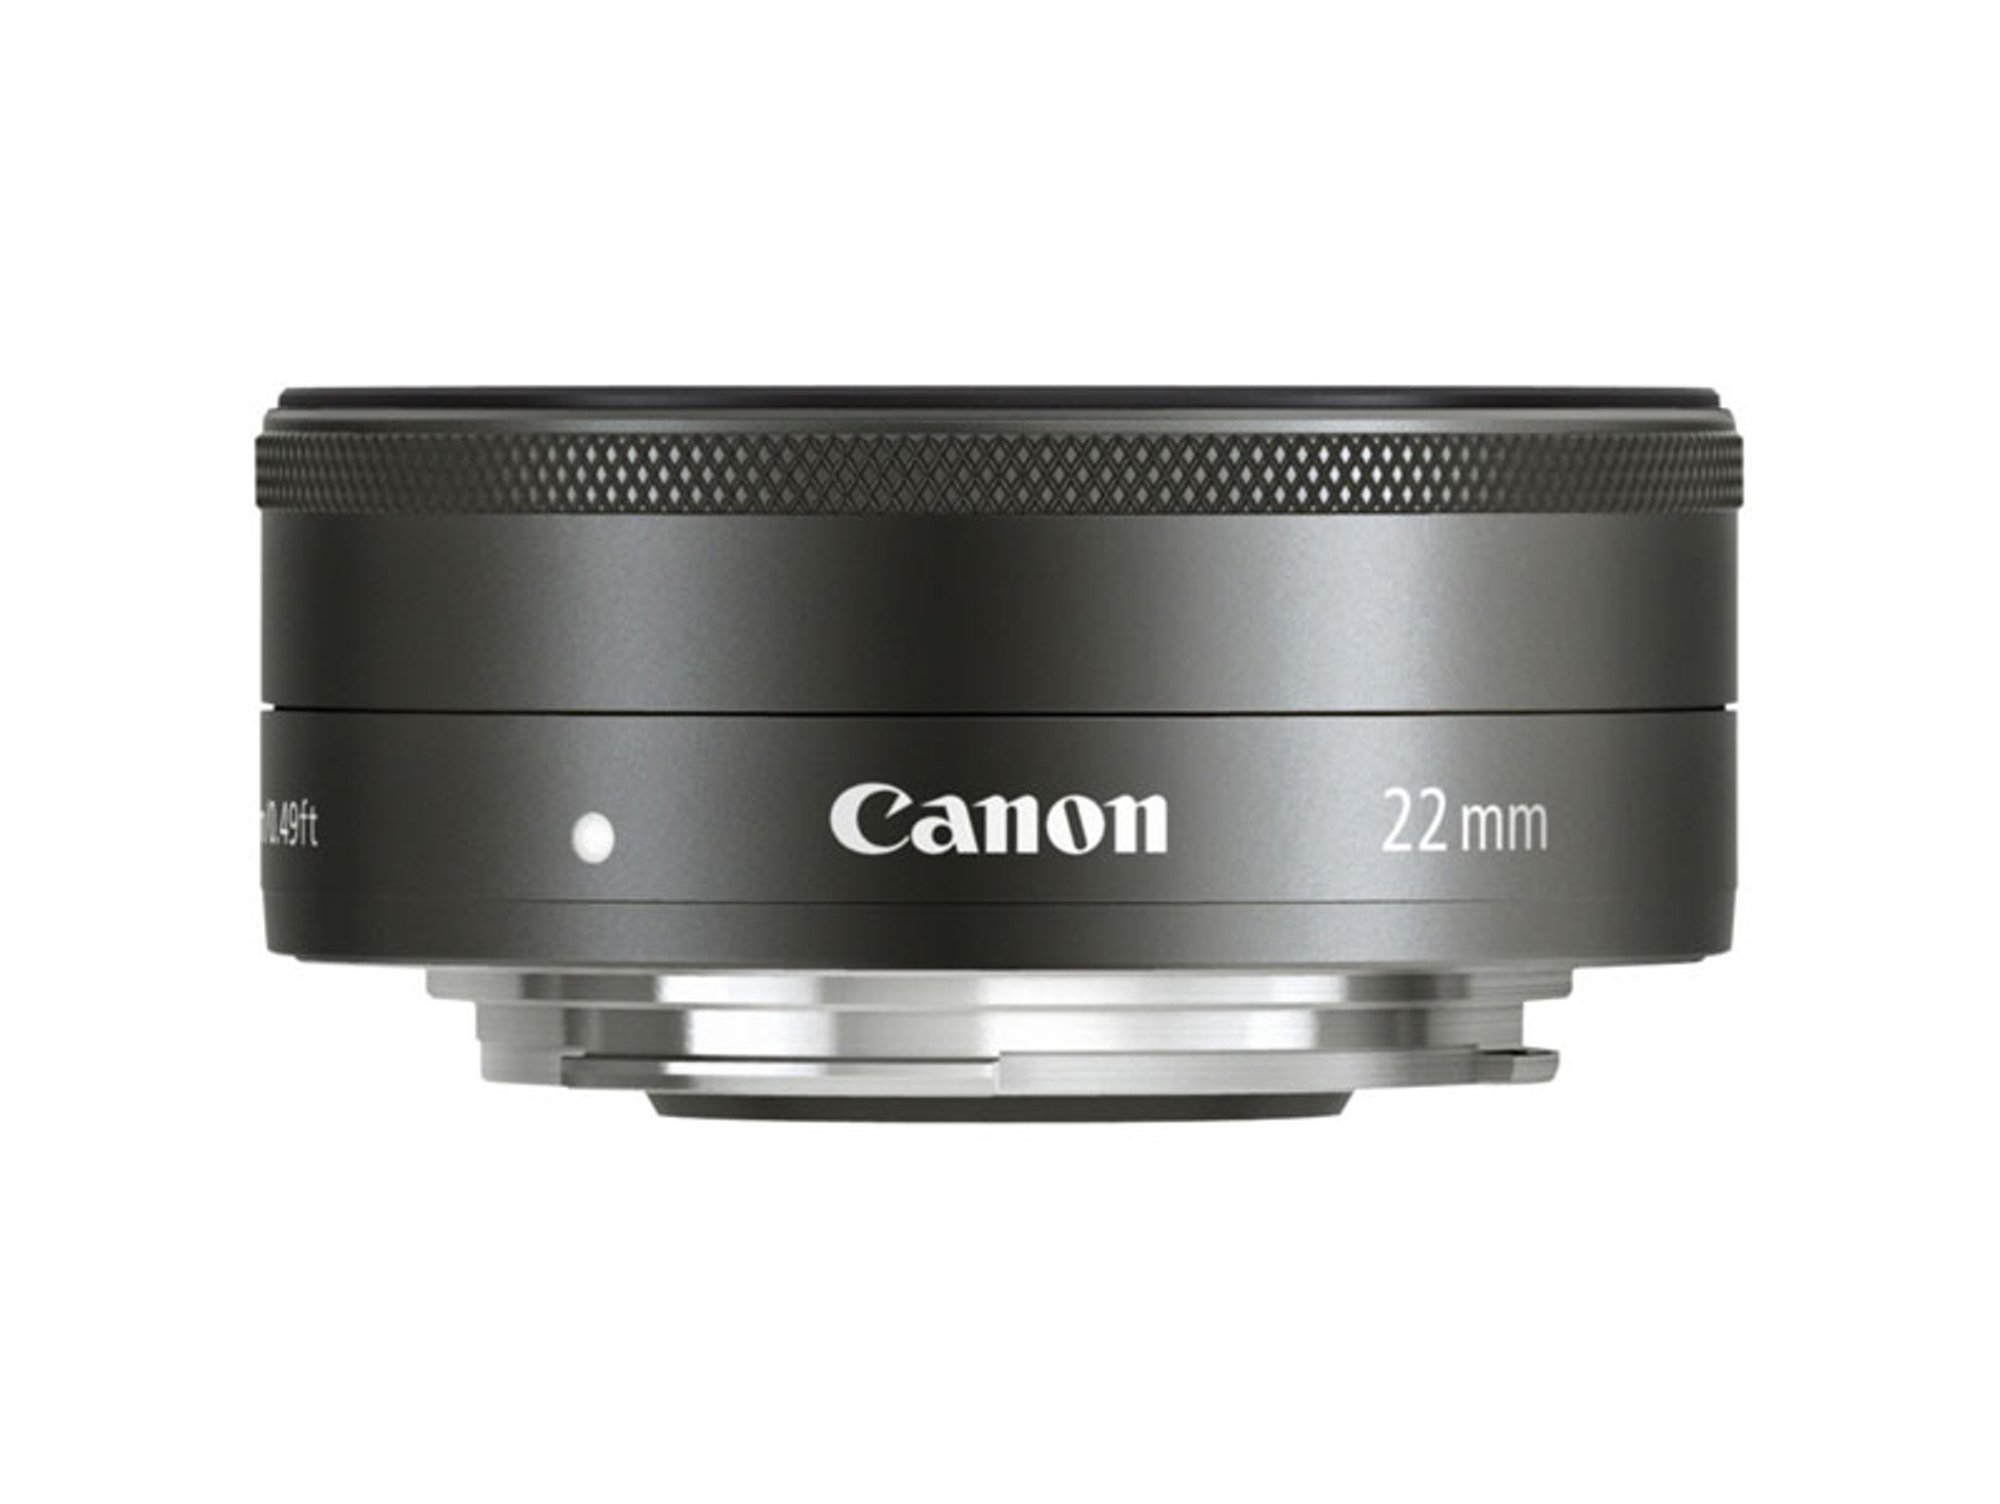 Objetivo CANON Ef-M 22mm 2.0 Stm (Encaje: Canon EF-M - Apertura: f/2 - f/22)